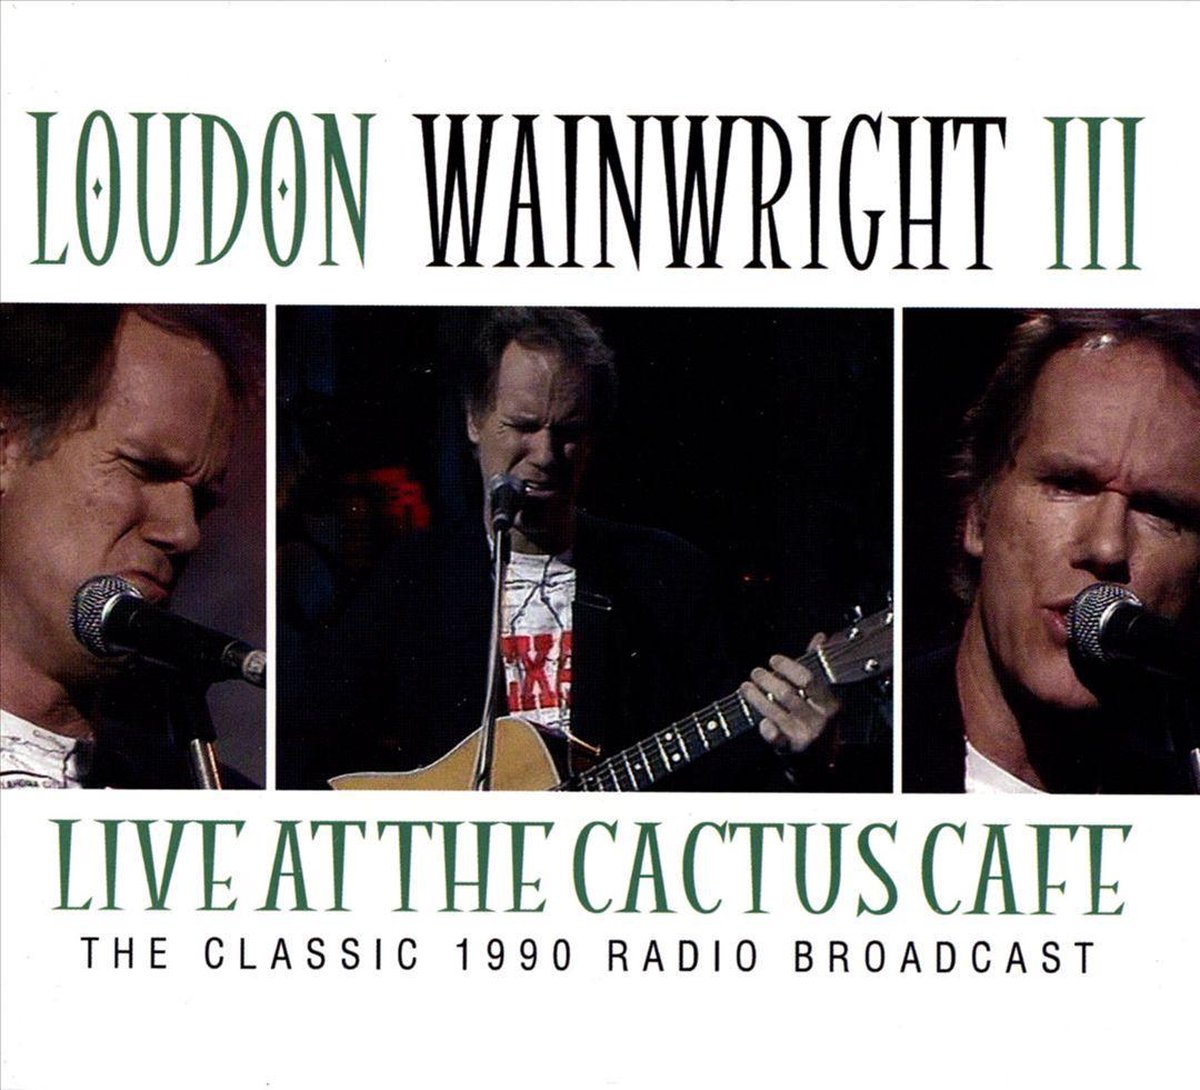 Live at the Cactus Cafe: The Classic 1990 Radio Broadcast - Loudon Wainwright Iii